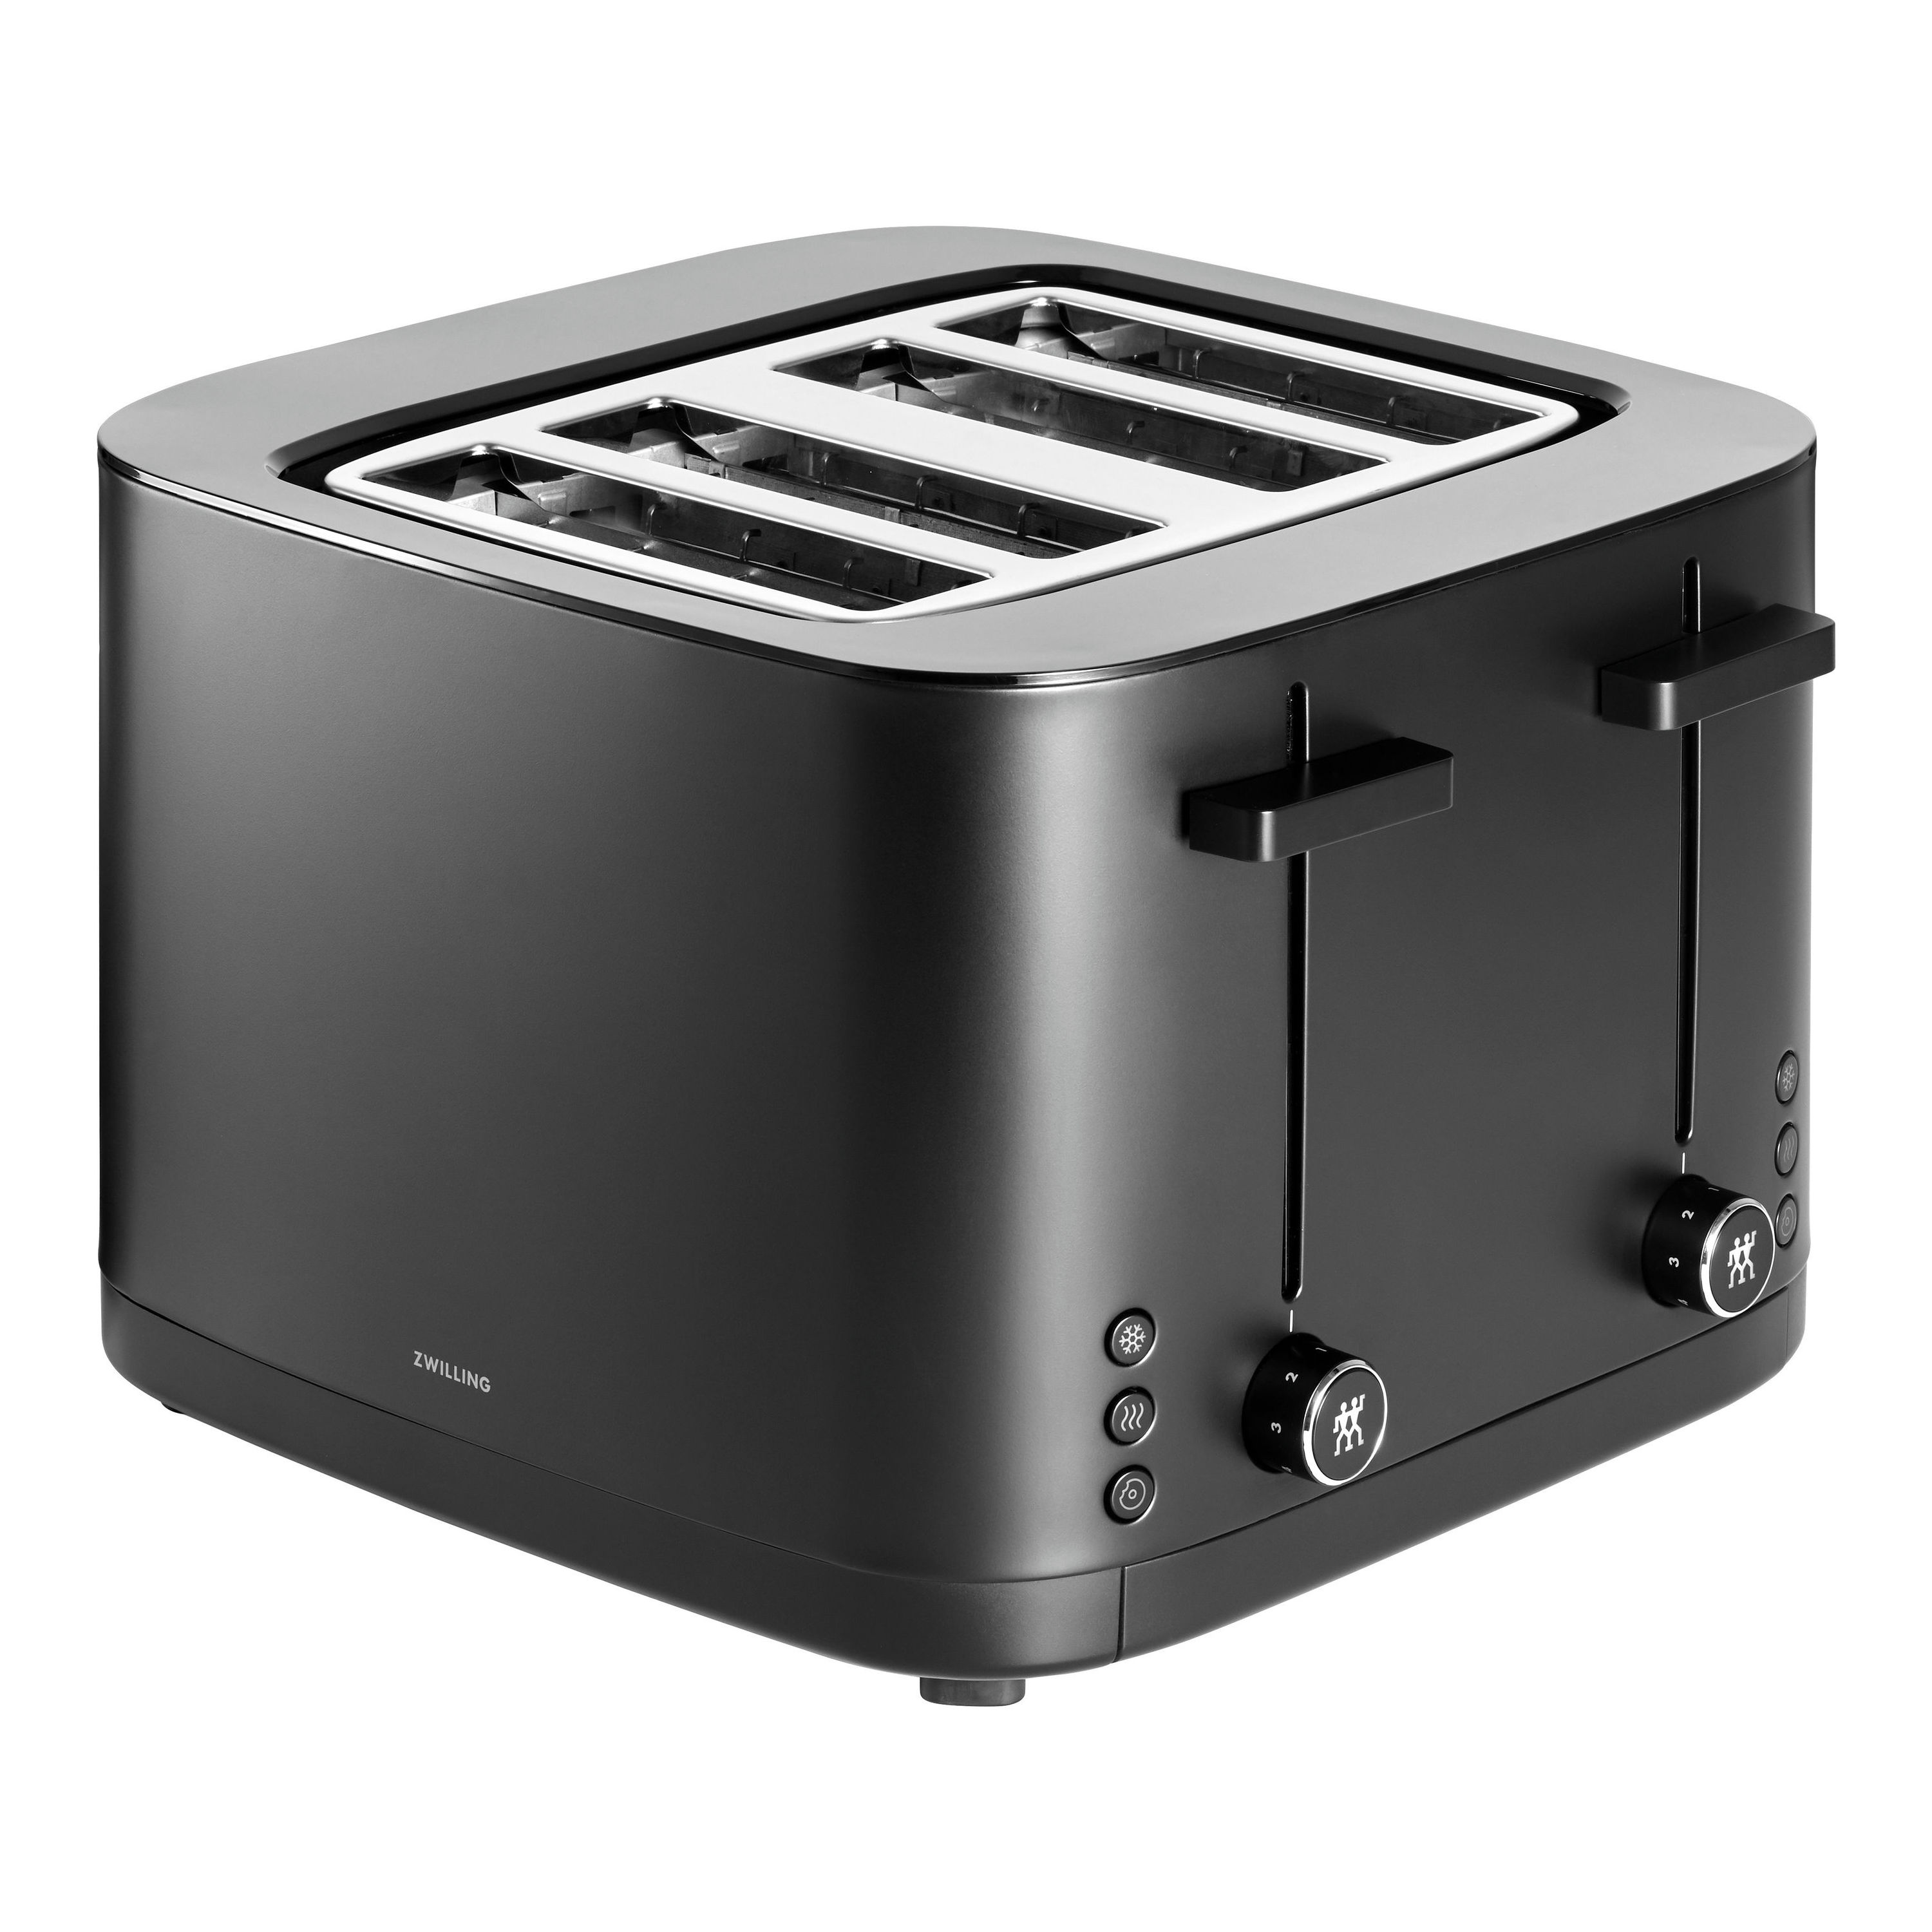 All-Clad Digital Stainless Steel 4-Slice Toaster